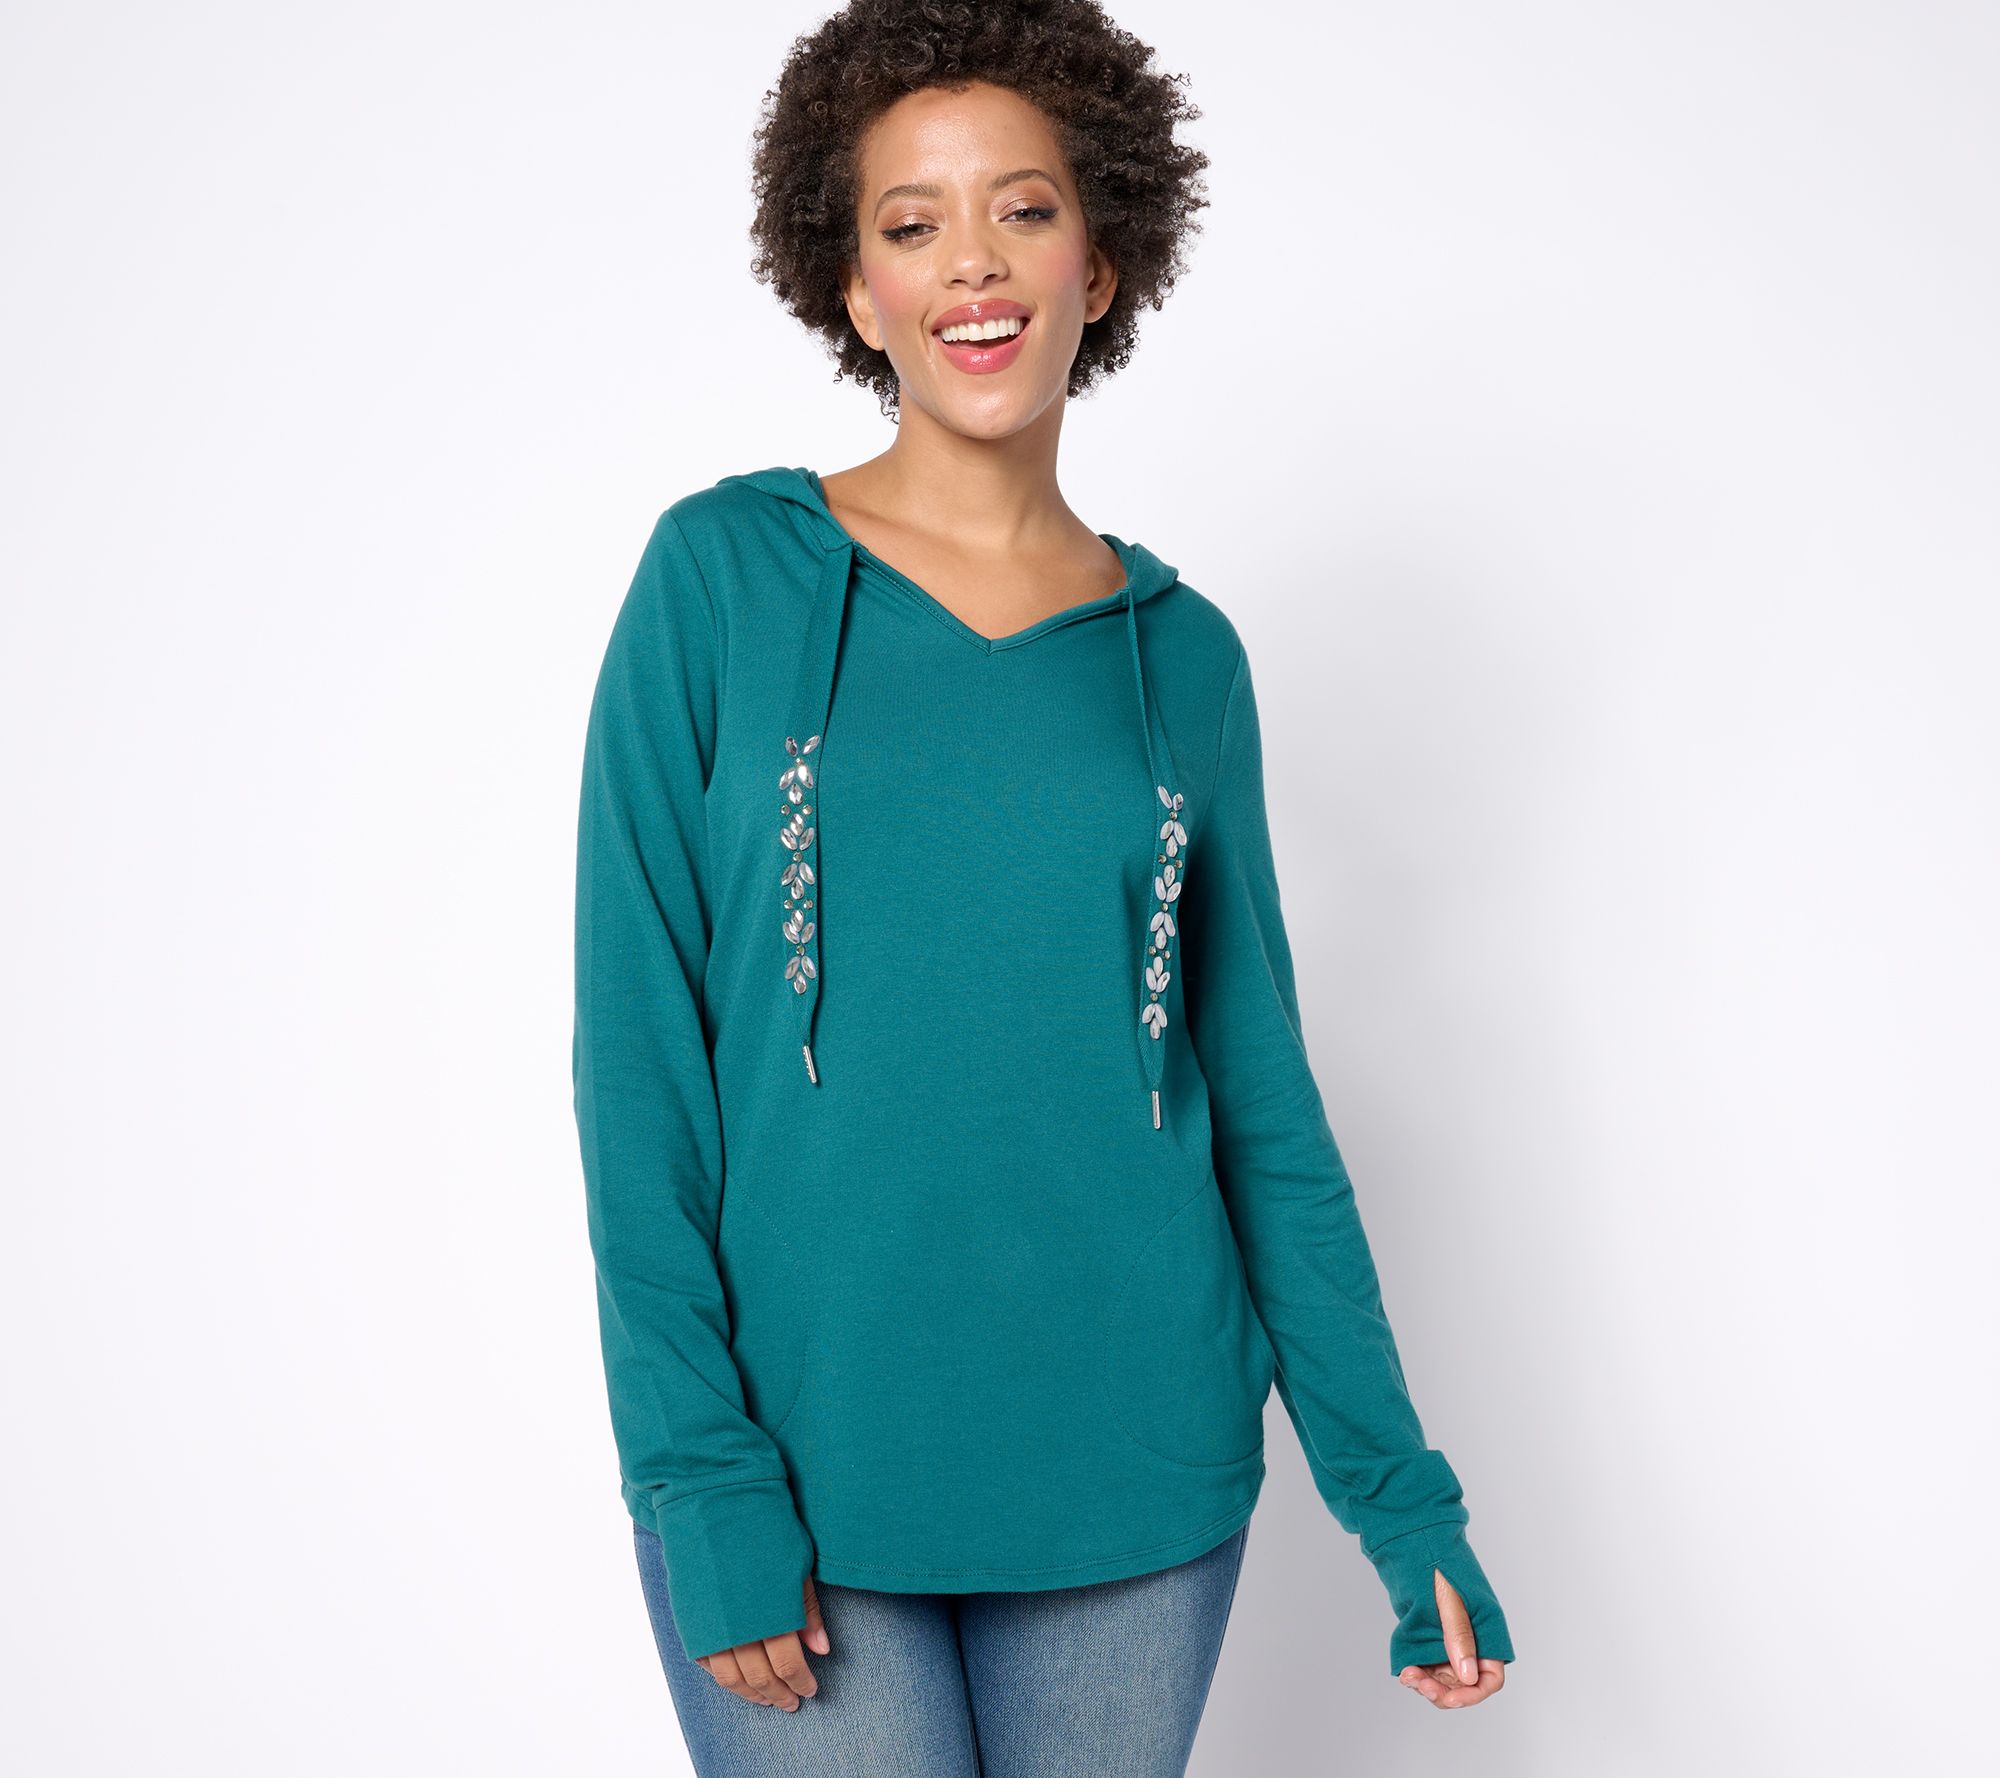 Women's Jeweled Pullover Sweatshirt - A New Day Dark Green 3X